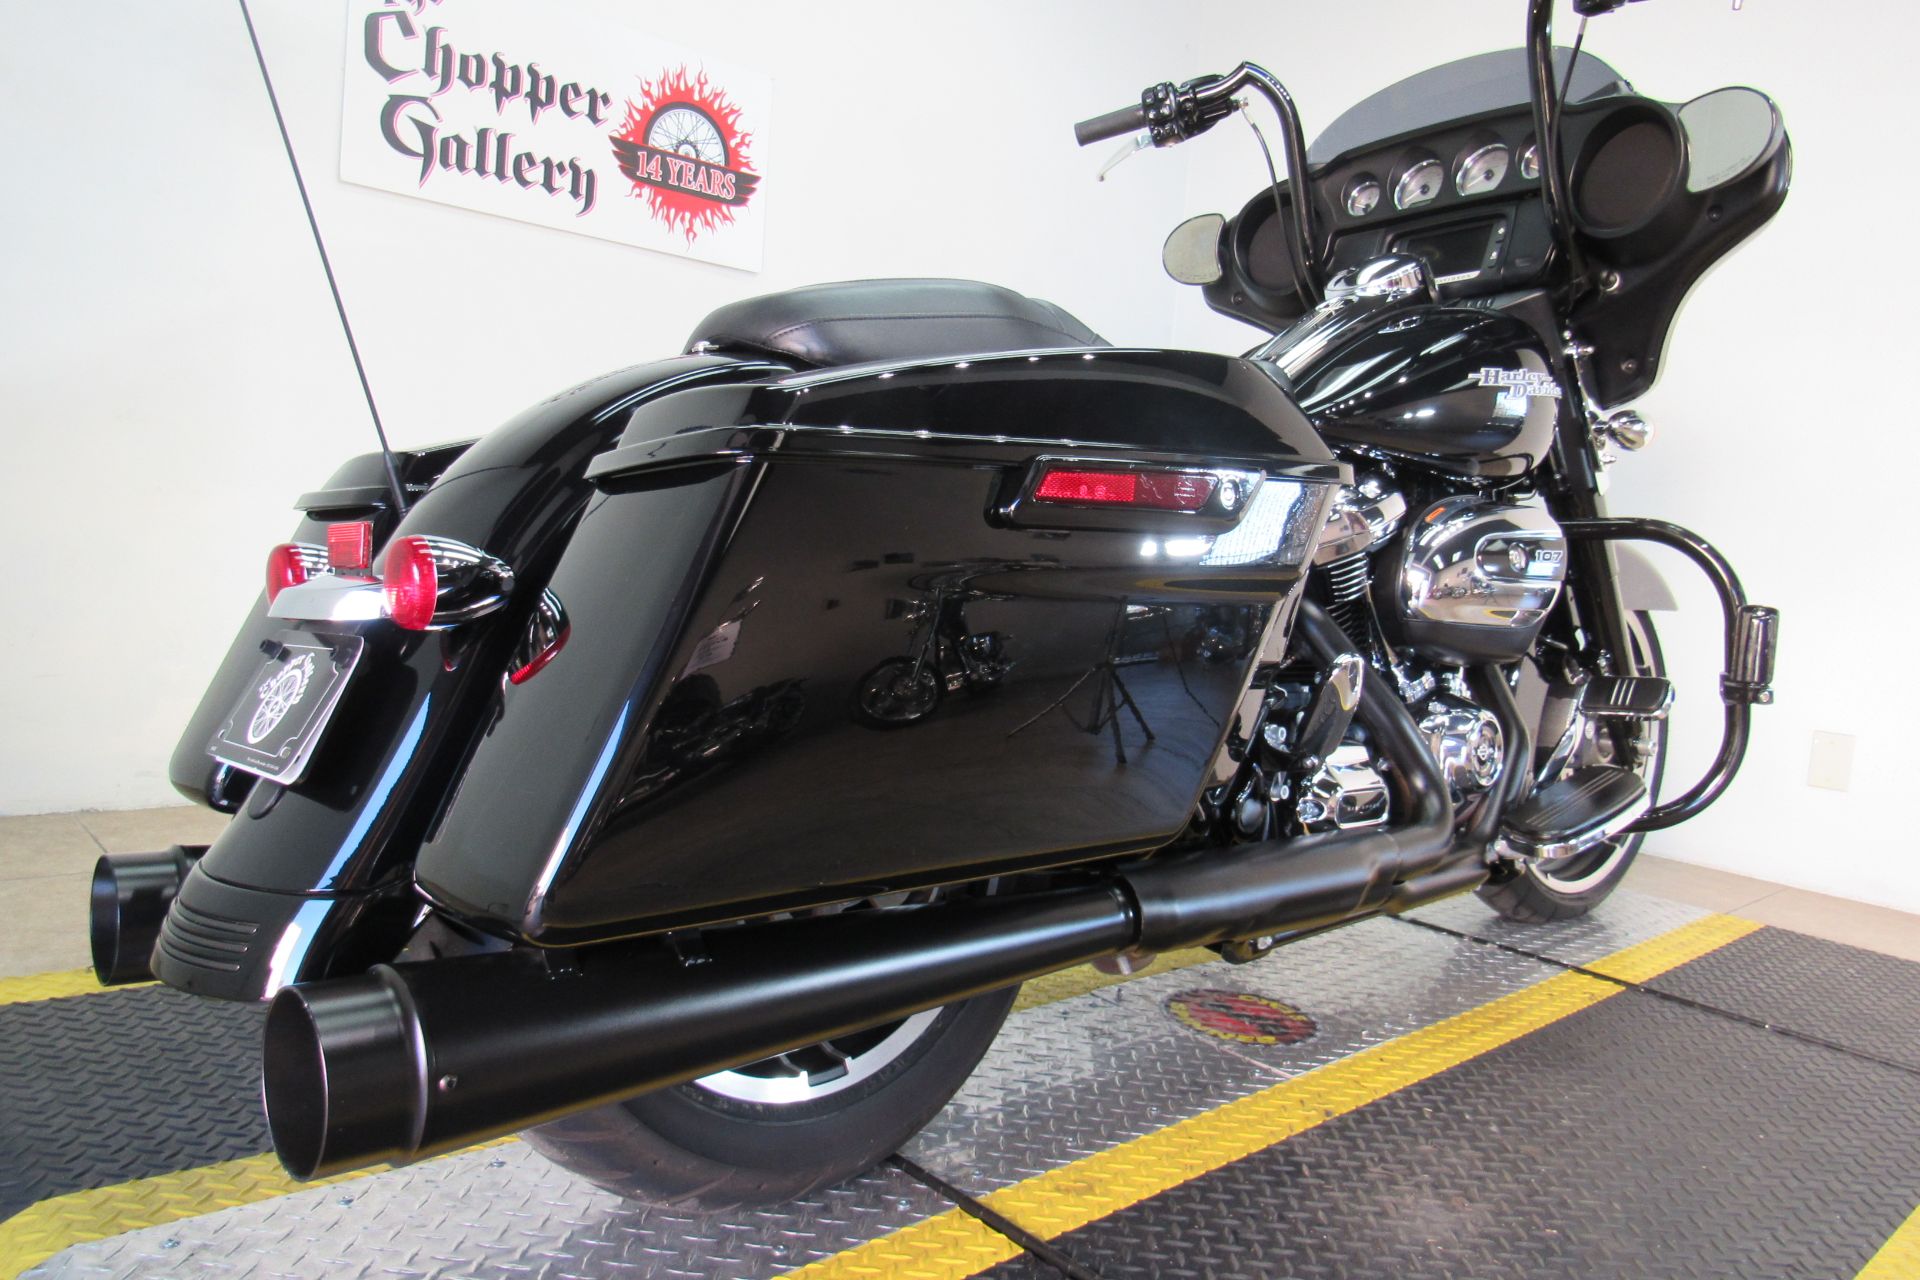 2018 Harley-Davidson Street Glide® in Temecula, California - Photo 36